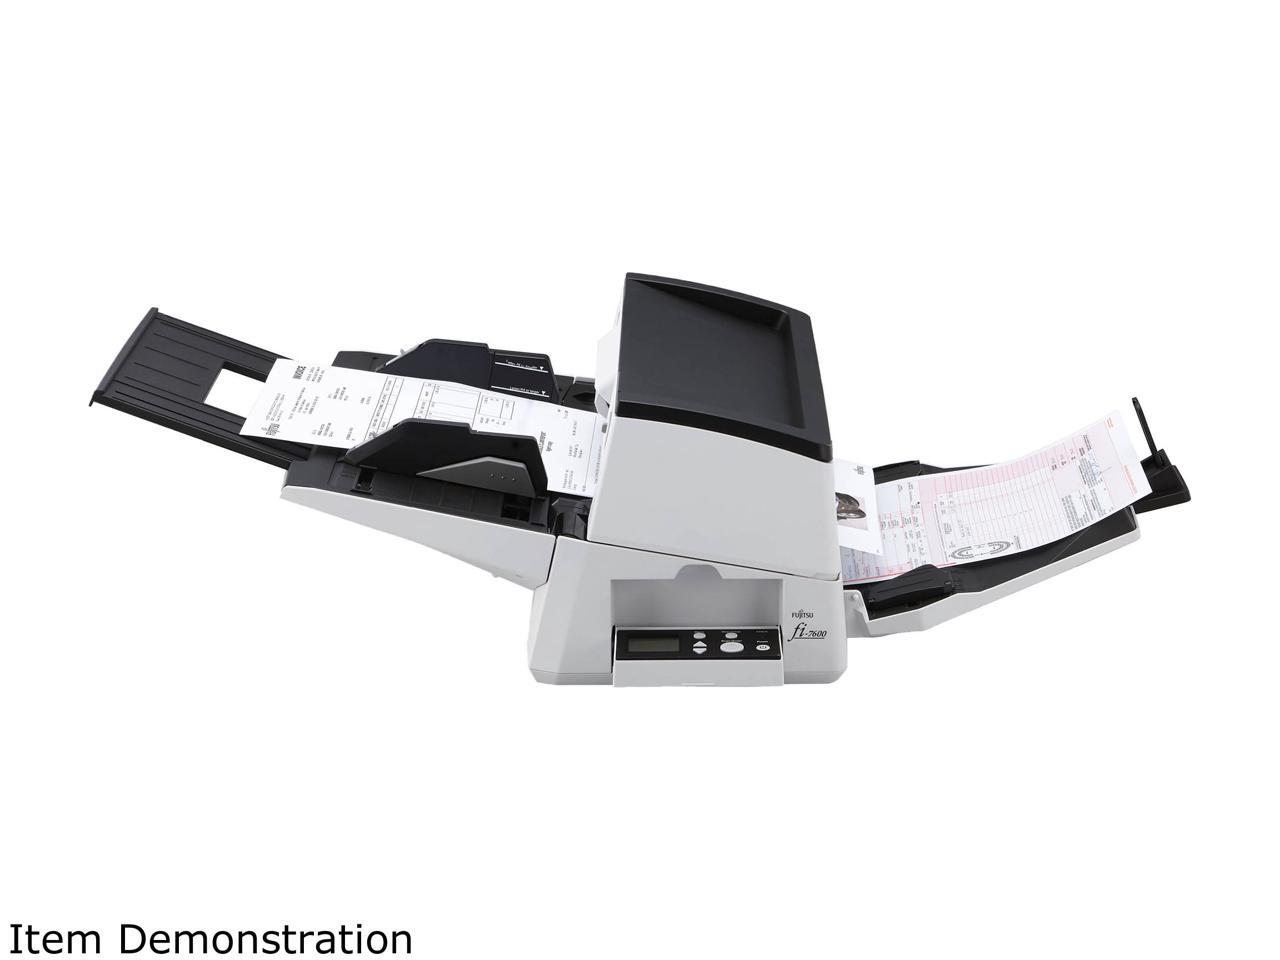 Fujitsu FI-7600(PA03740-B505) Duplex 600 DPI x 600 DPI Production-class ADF document scanner